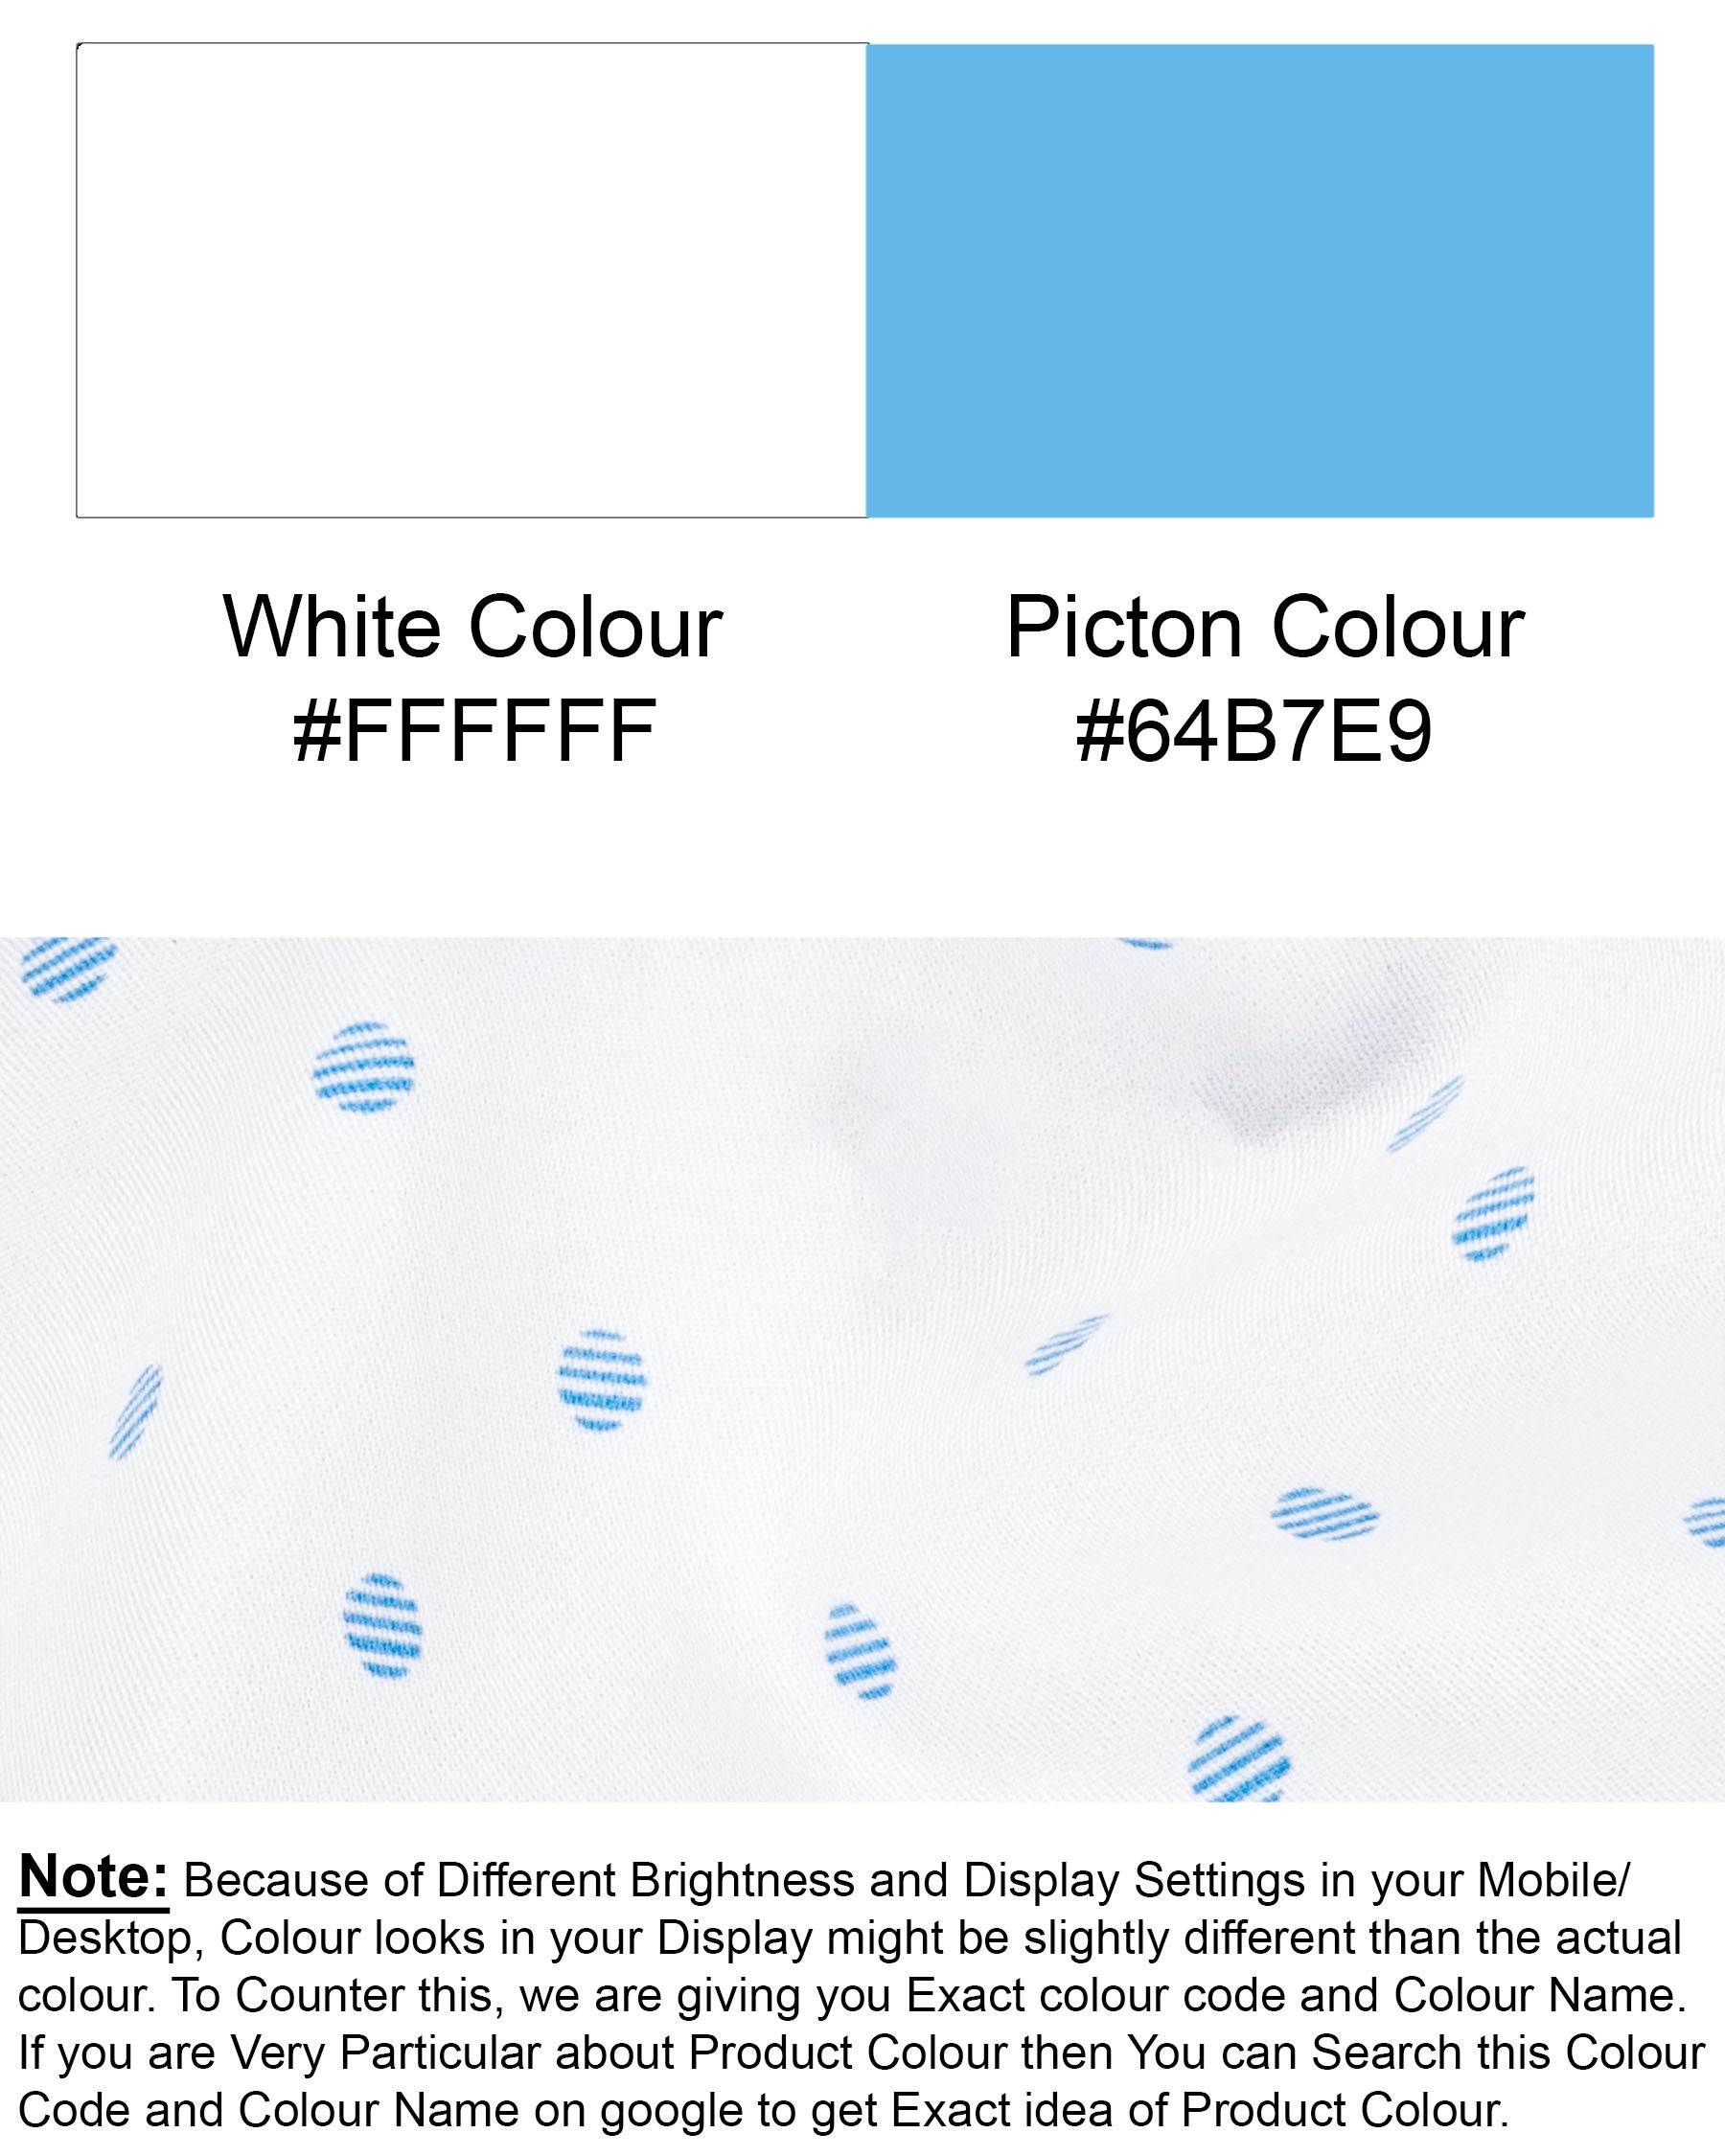 Bright White and Picton Blue Dotted Super Soft Premium Cotton Shirt 6978-38,6978-38,6978-39,6978-39,6978-40,6978-40,6978-42,6978-42,6978-44,6978-44,6978-46,6978-46,6978-48,6978-48,6978-50,6978-50,6978-52,6978-52